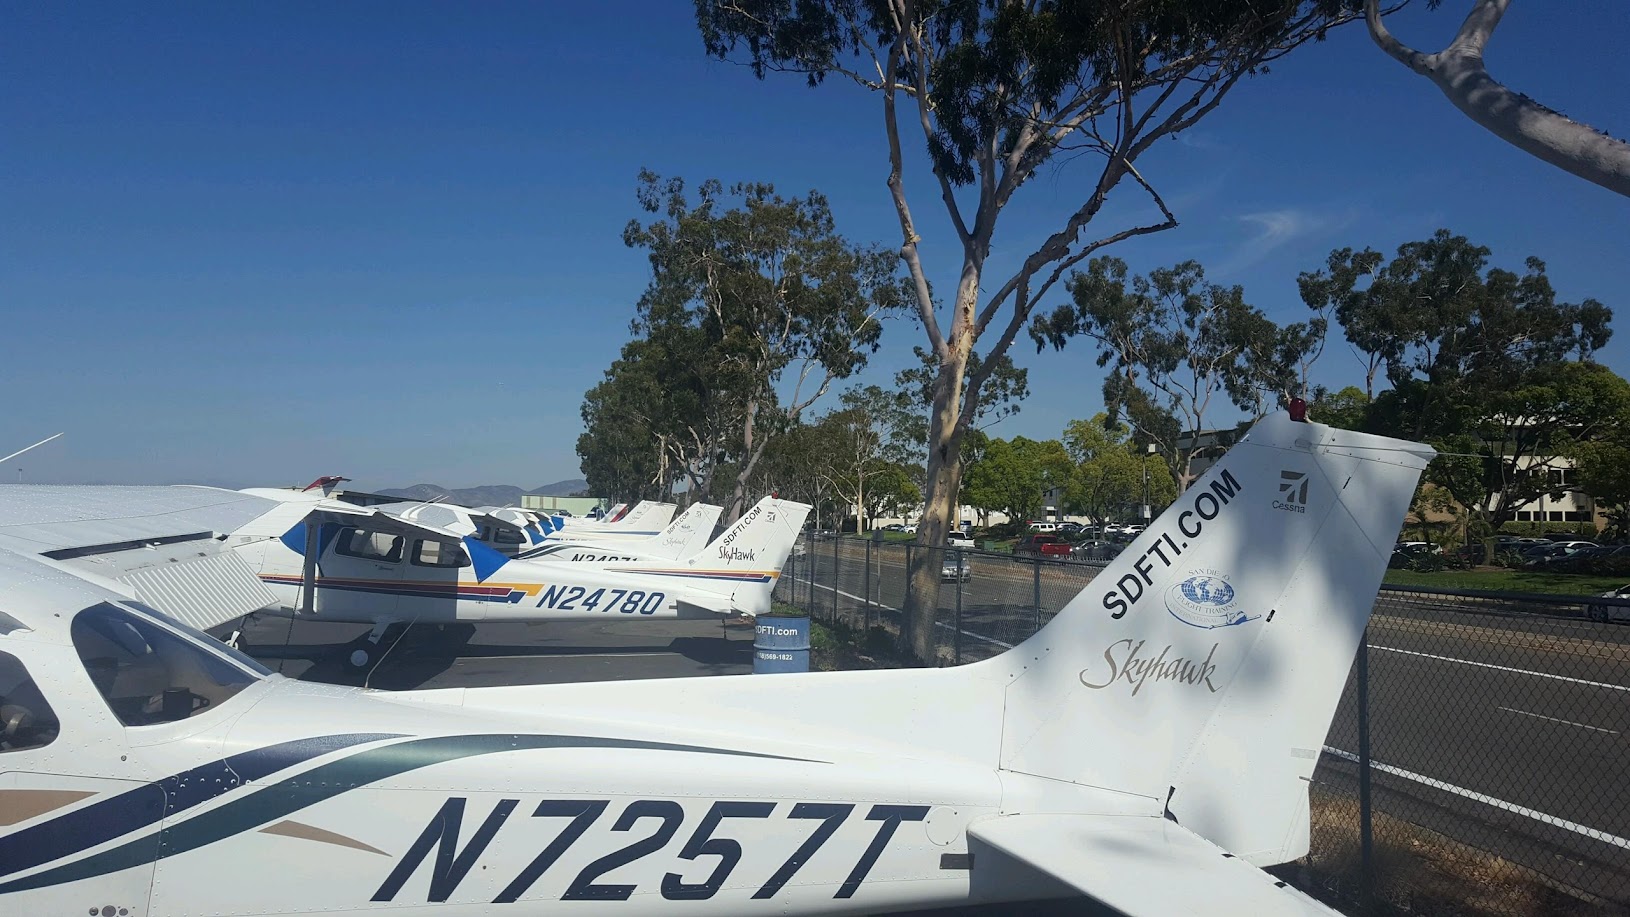 San Diego Flight Training International